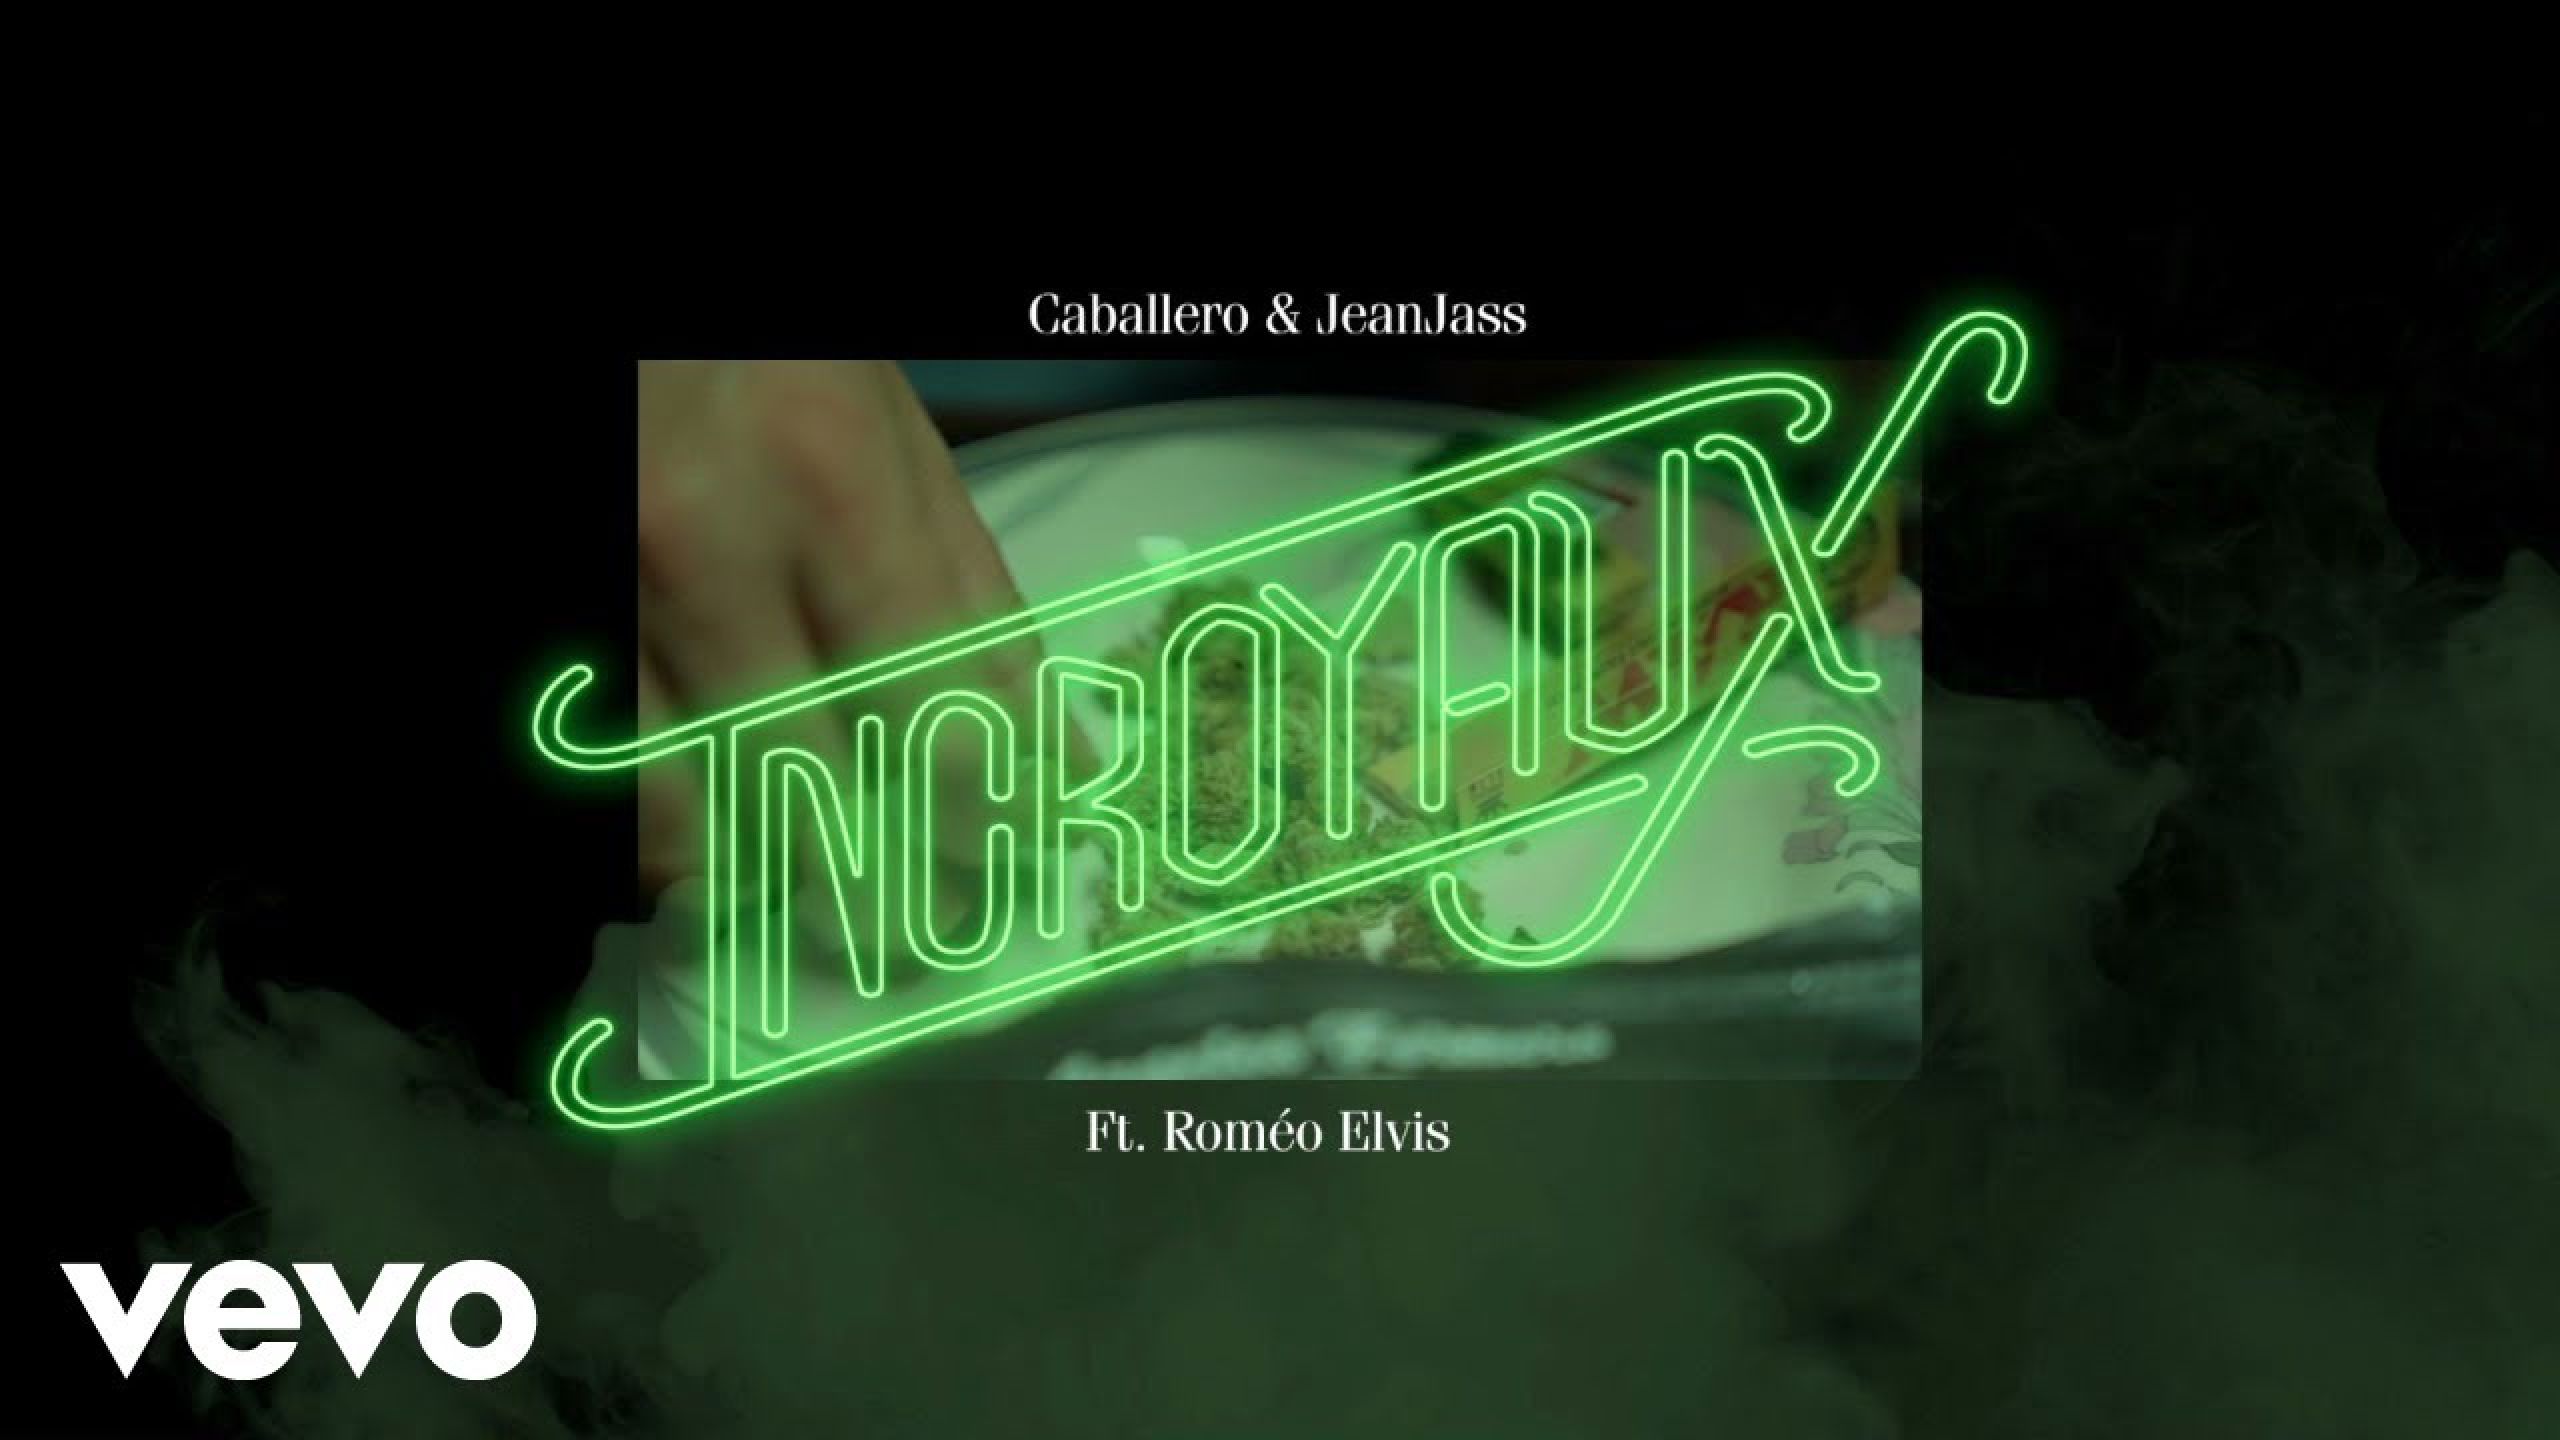 Caballero & JeanJass - Incroyaux ft. Roméo Elvis